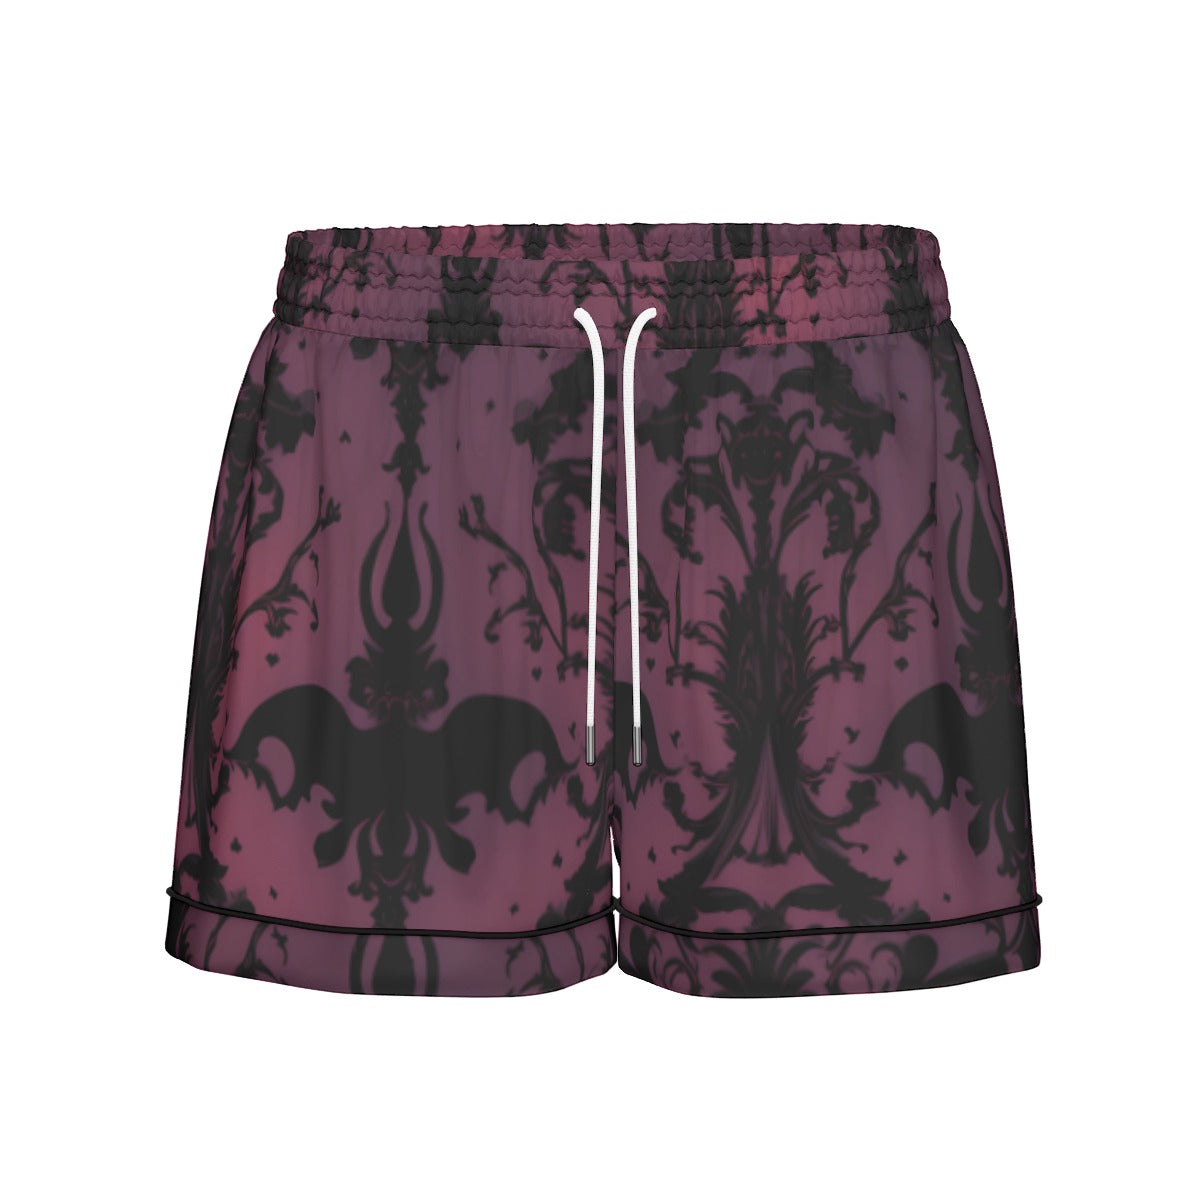 Gothic Purple Women's Imitation Silk Pajama Set With Short Sleeve